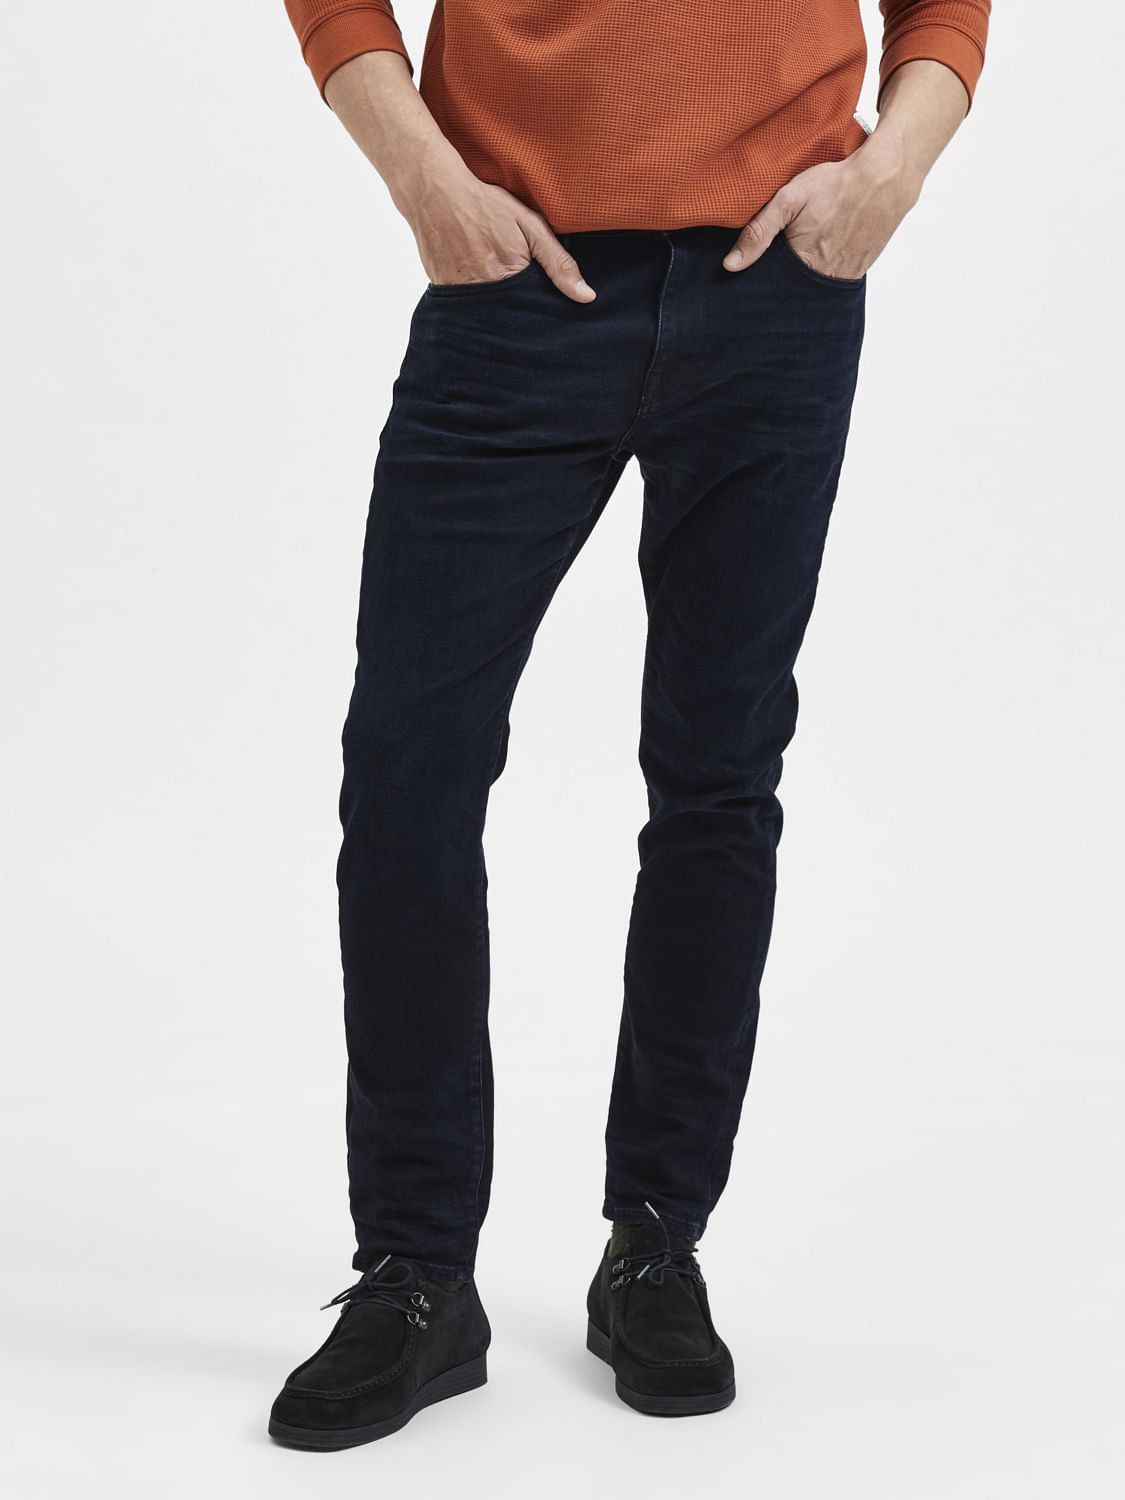 Levis 510 Black Label Skinny Fit Denim Blue Jeans Mens Size 28X30 | eBay